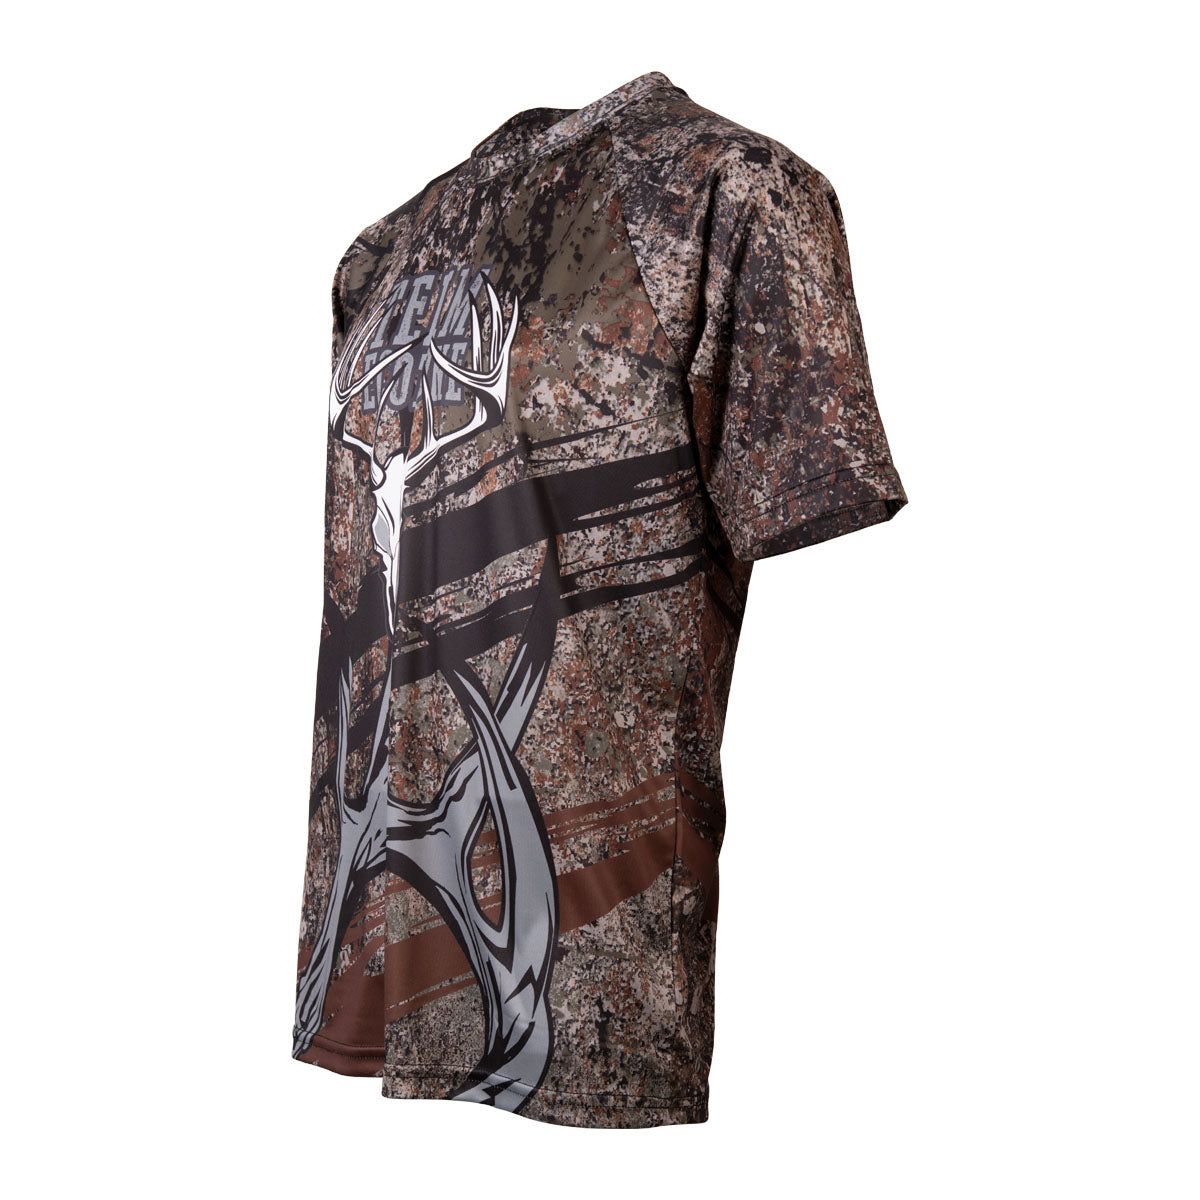 Men's short-sleeved "Team Ecotone hunting" camo T-shirt The Ripper